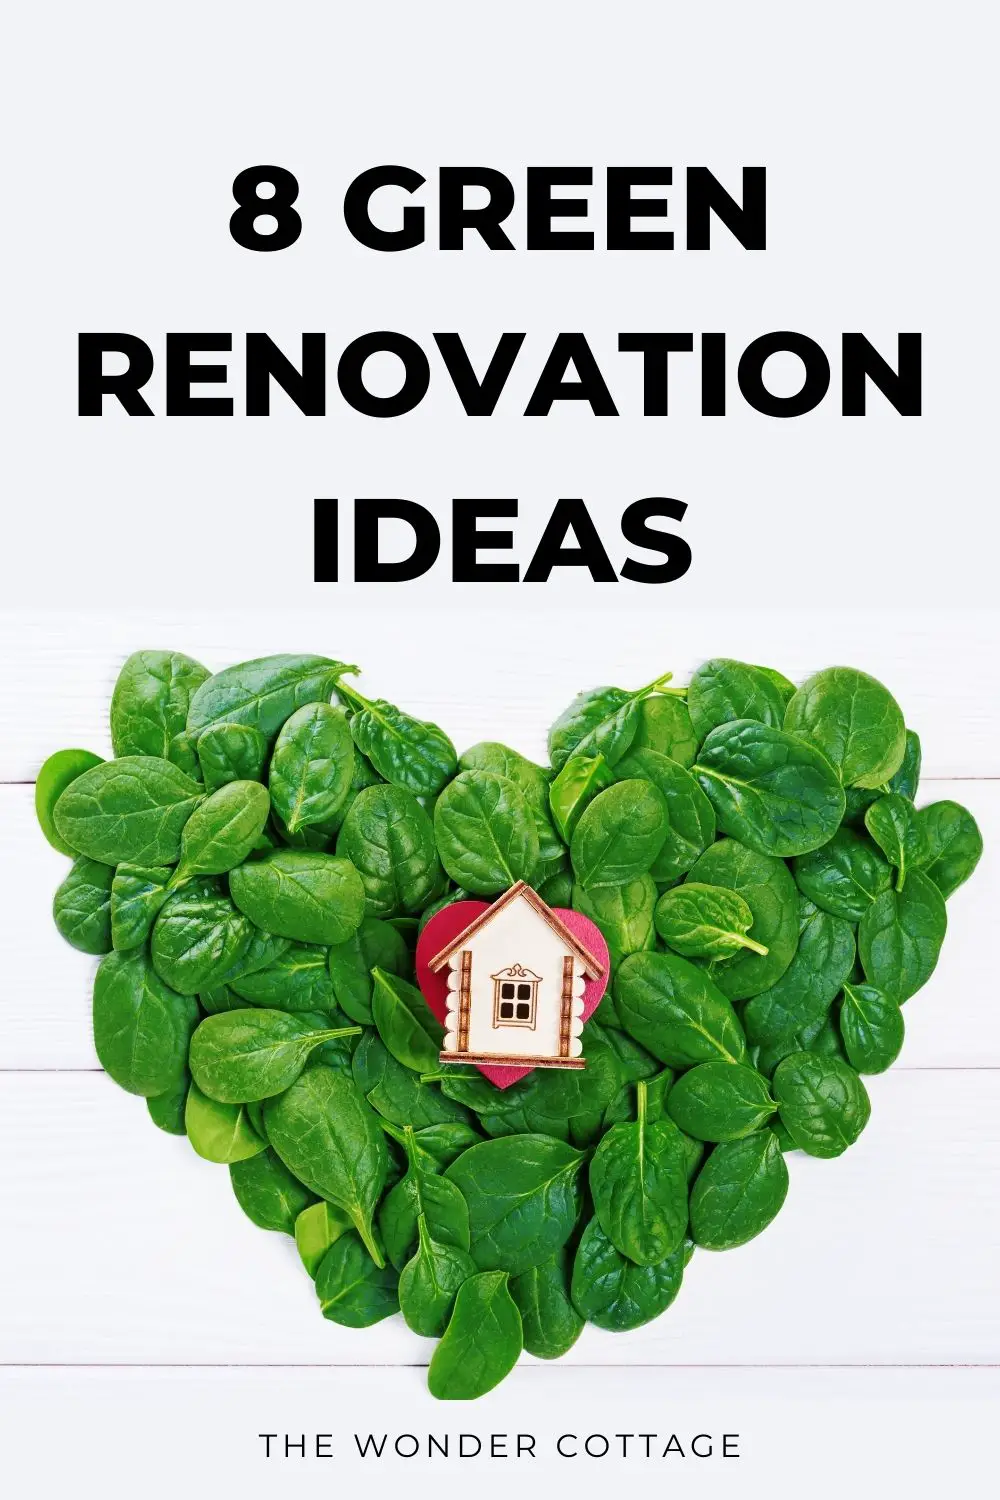 8 green renovation ideas